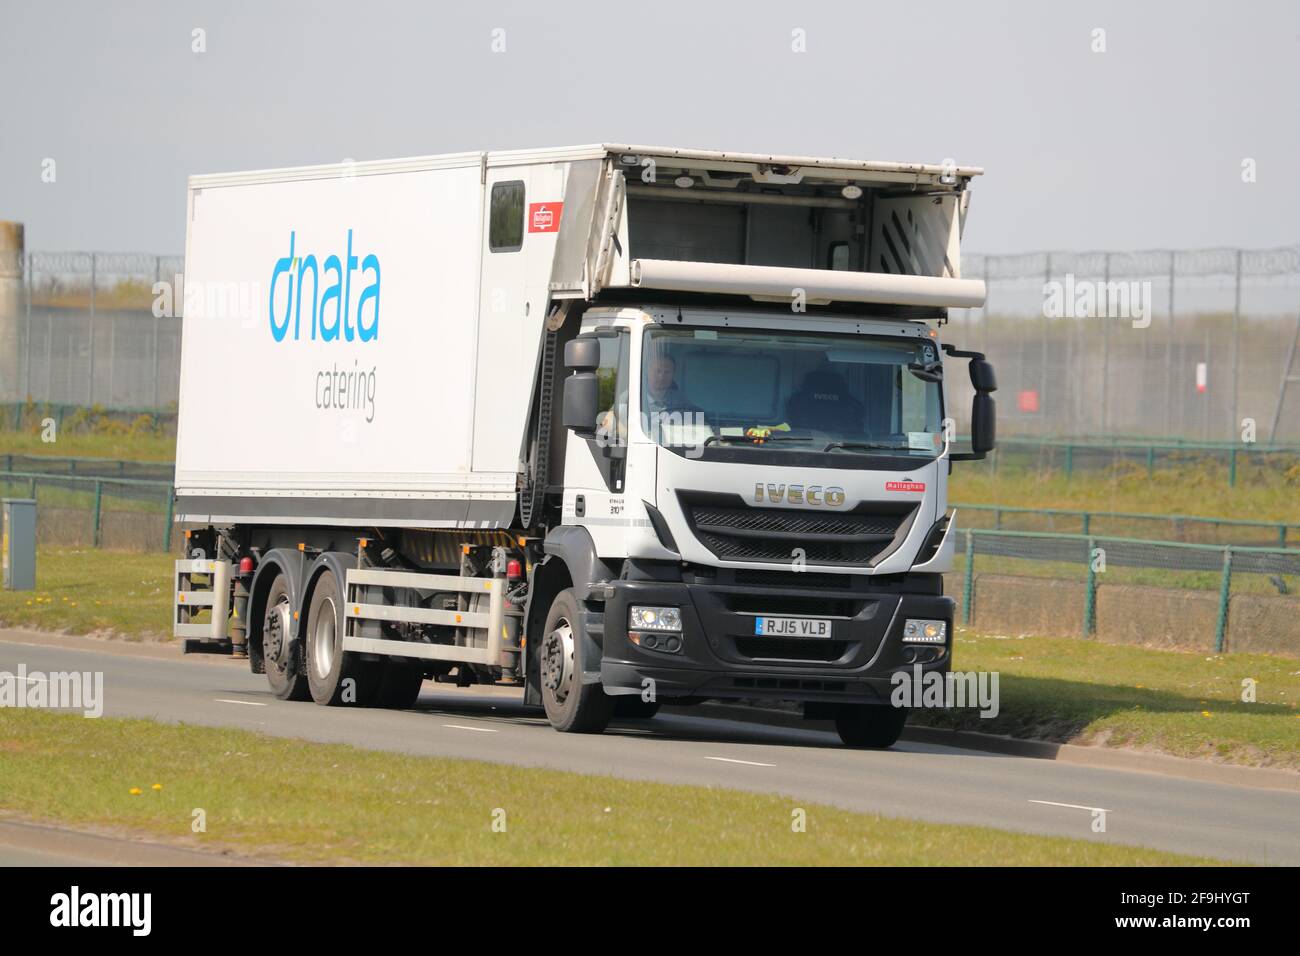 A dnata catering truck near Heathrow Airport, London, UK Stock Photo